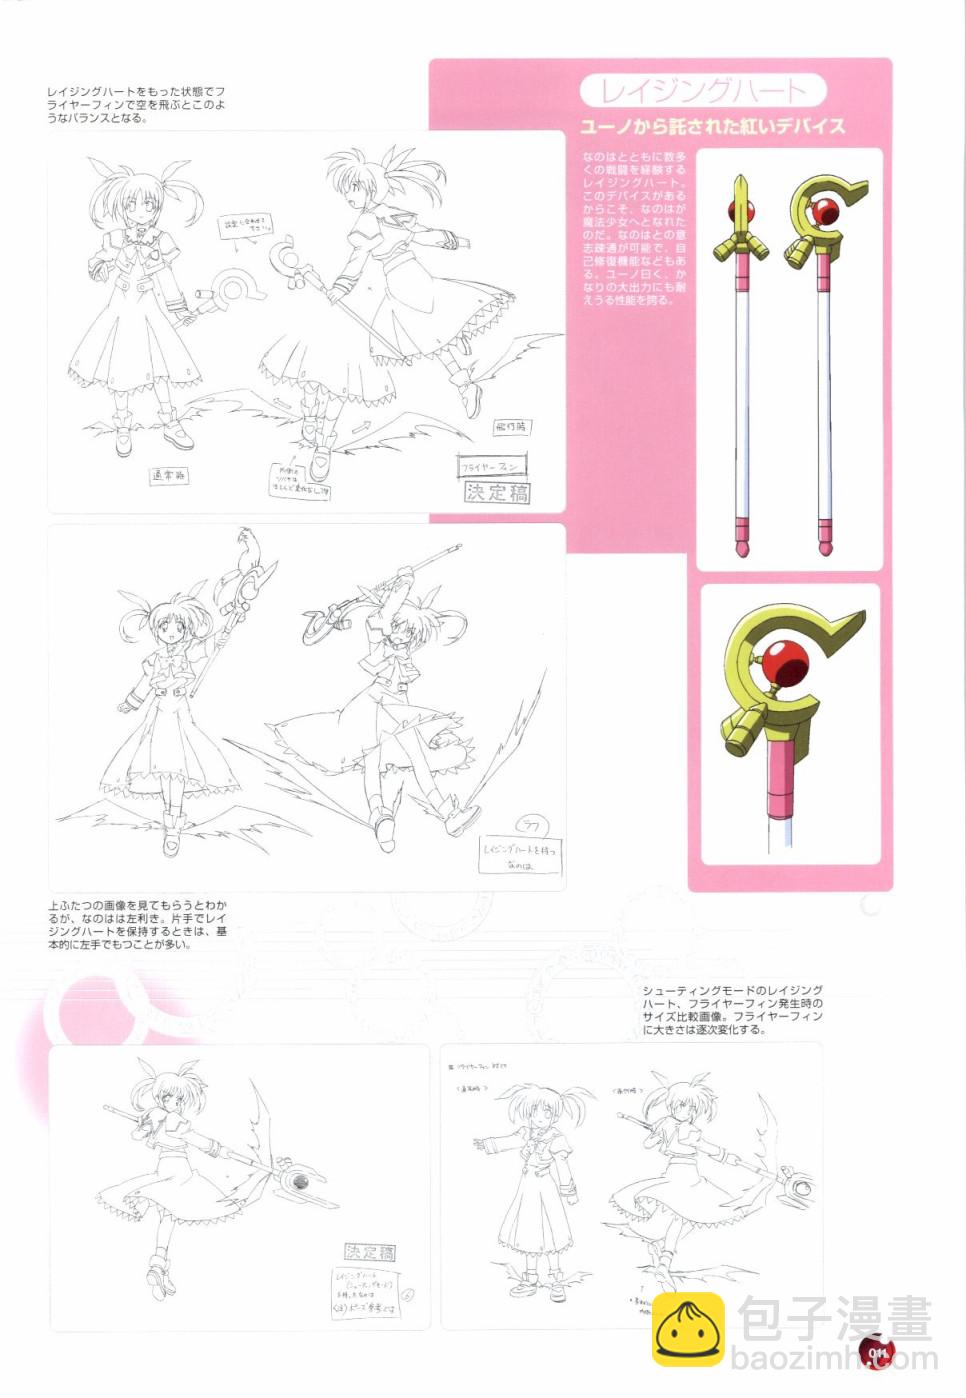 魔法少女奈葉Visual Fanbook - 1卷(1/3) - 3